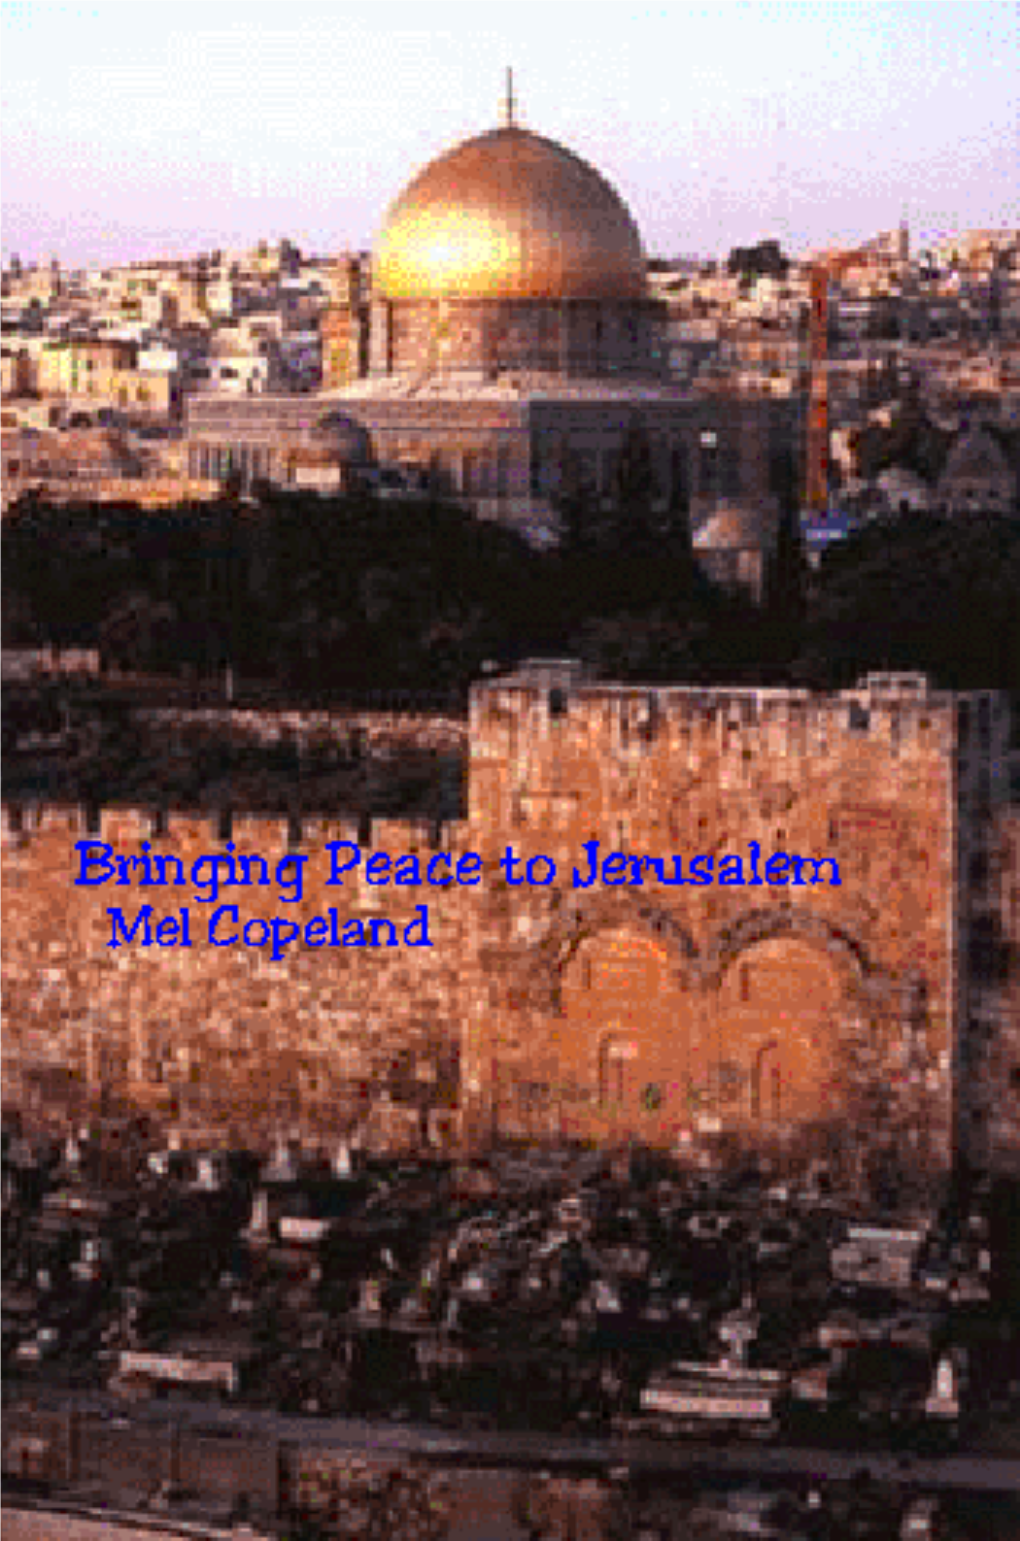 Bringing Forth the Peace of Jerusalem